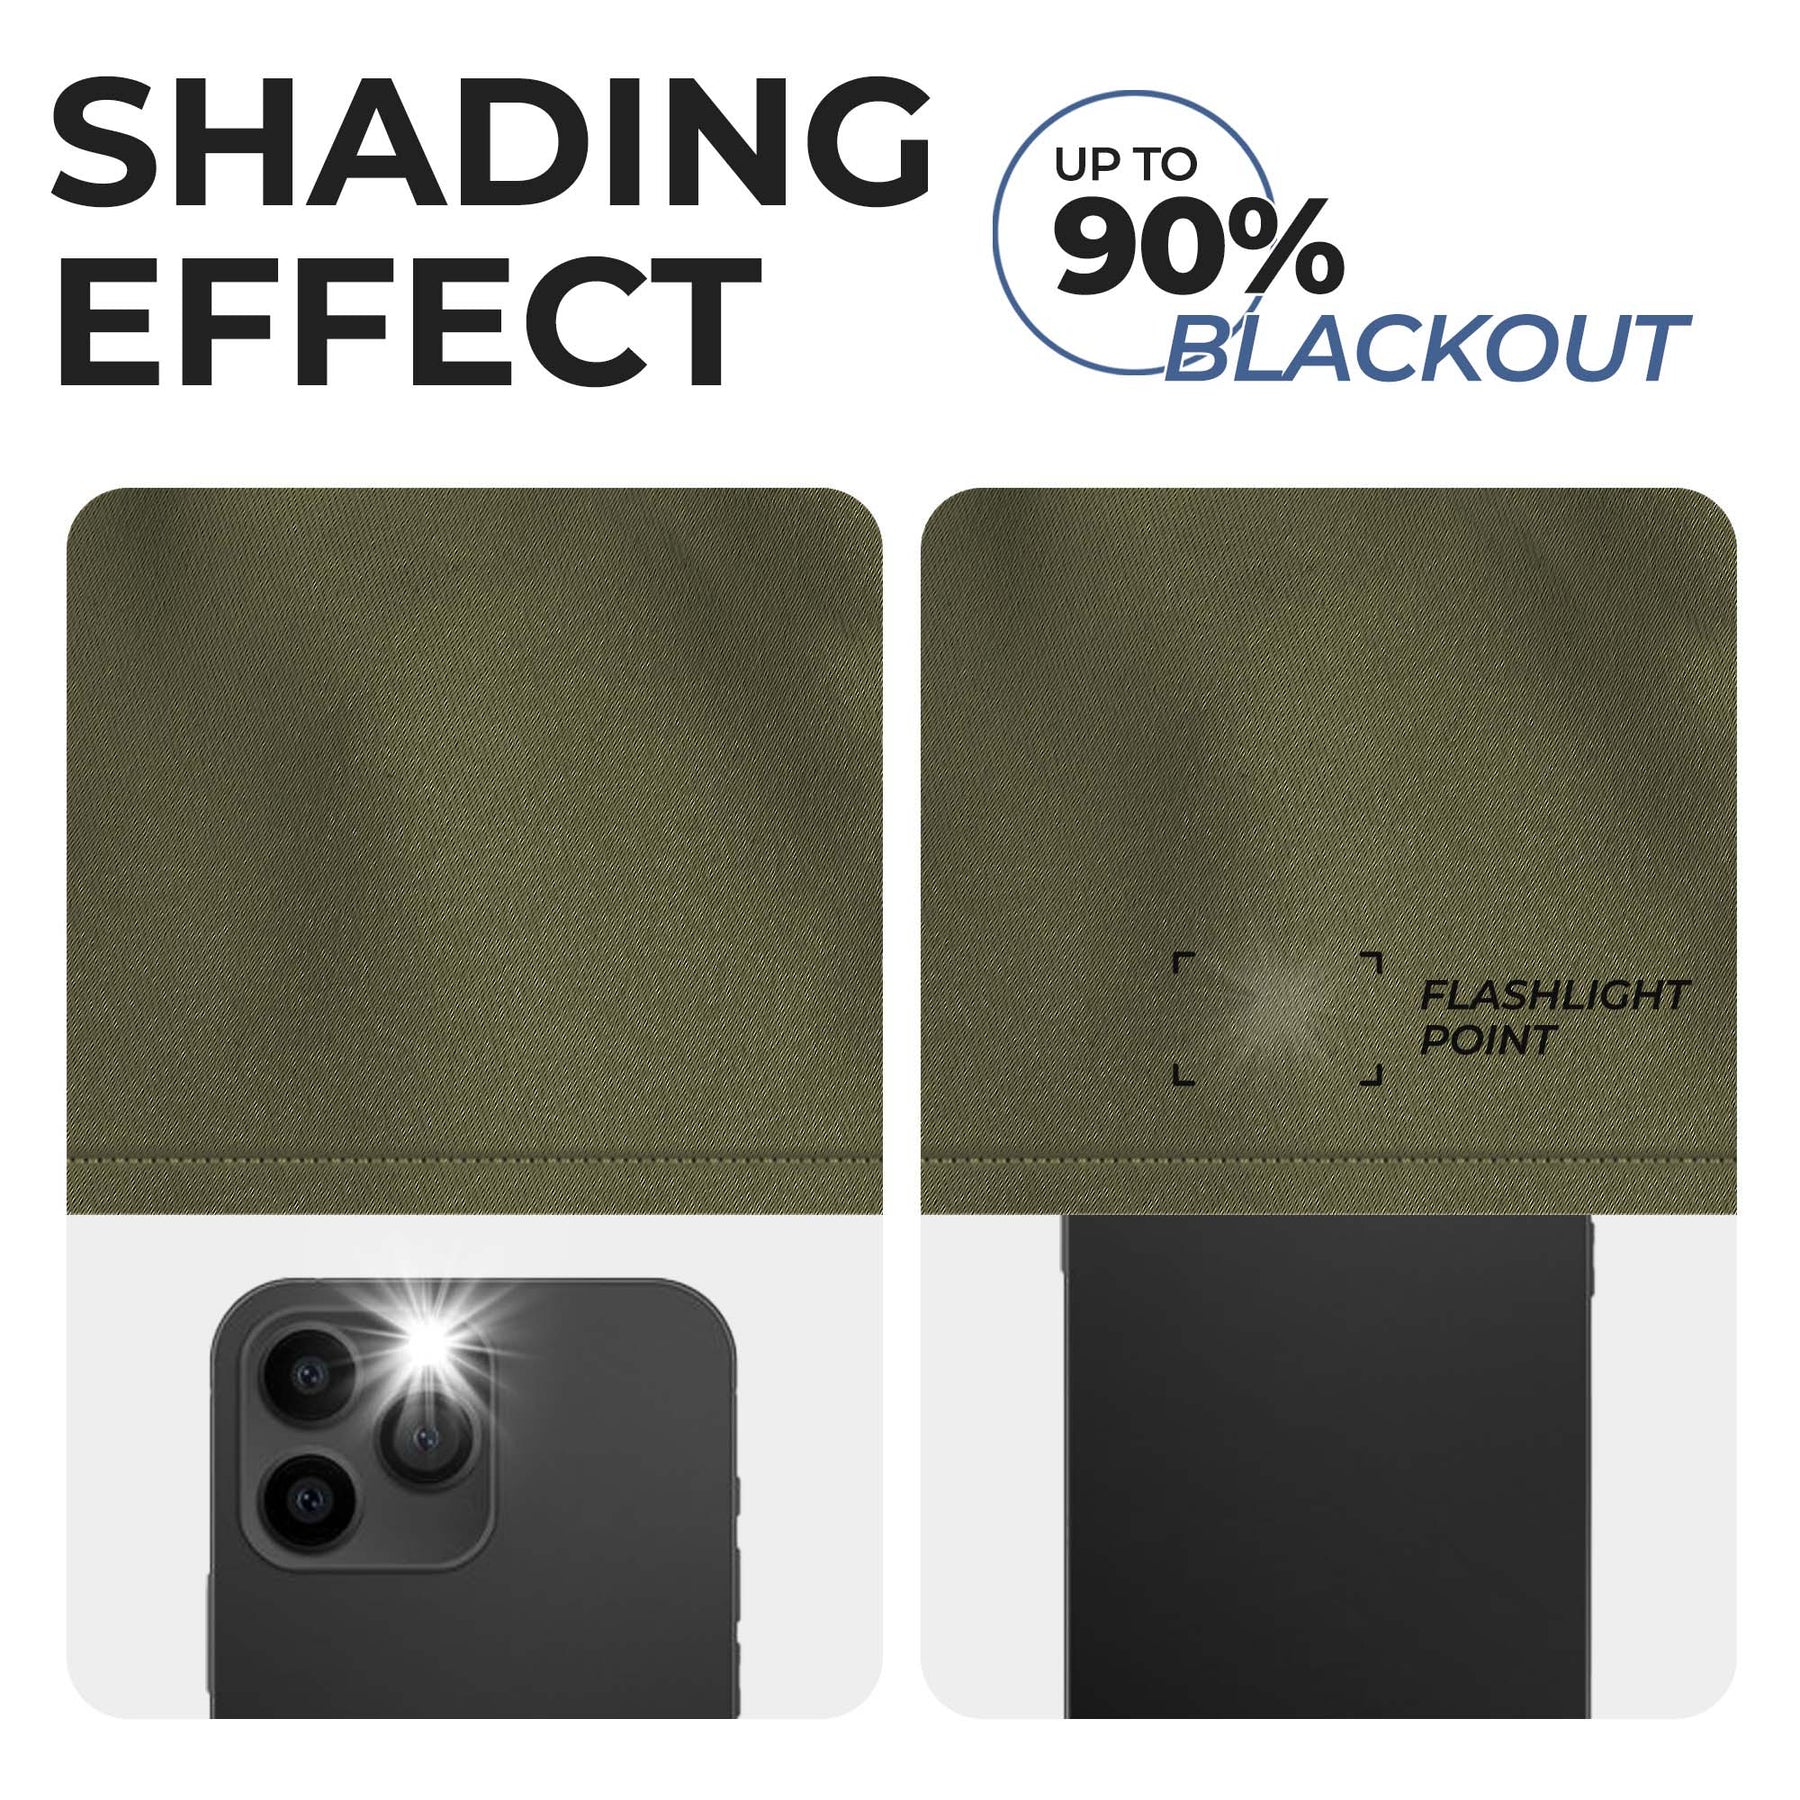 Classic Modern Rod Pocket Solid Blackout Curtain Set - Olive Green